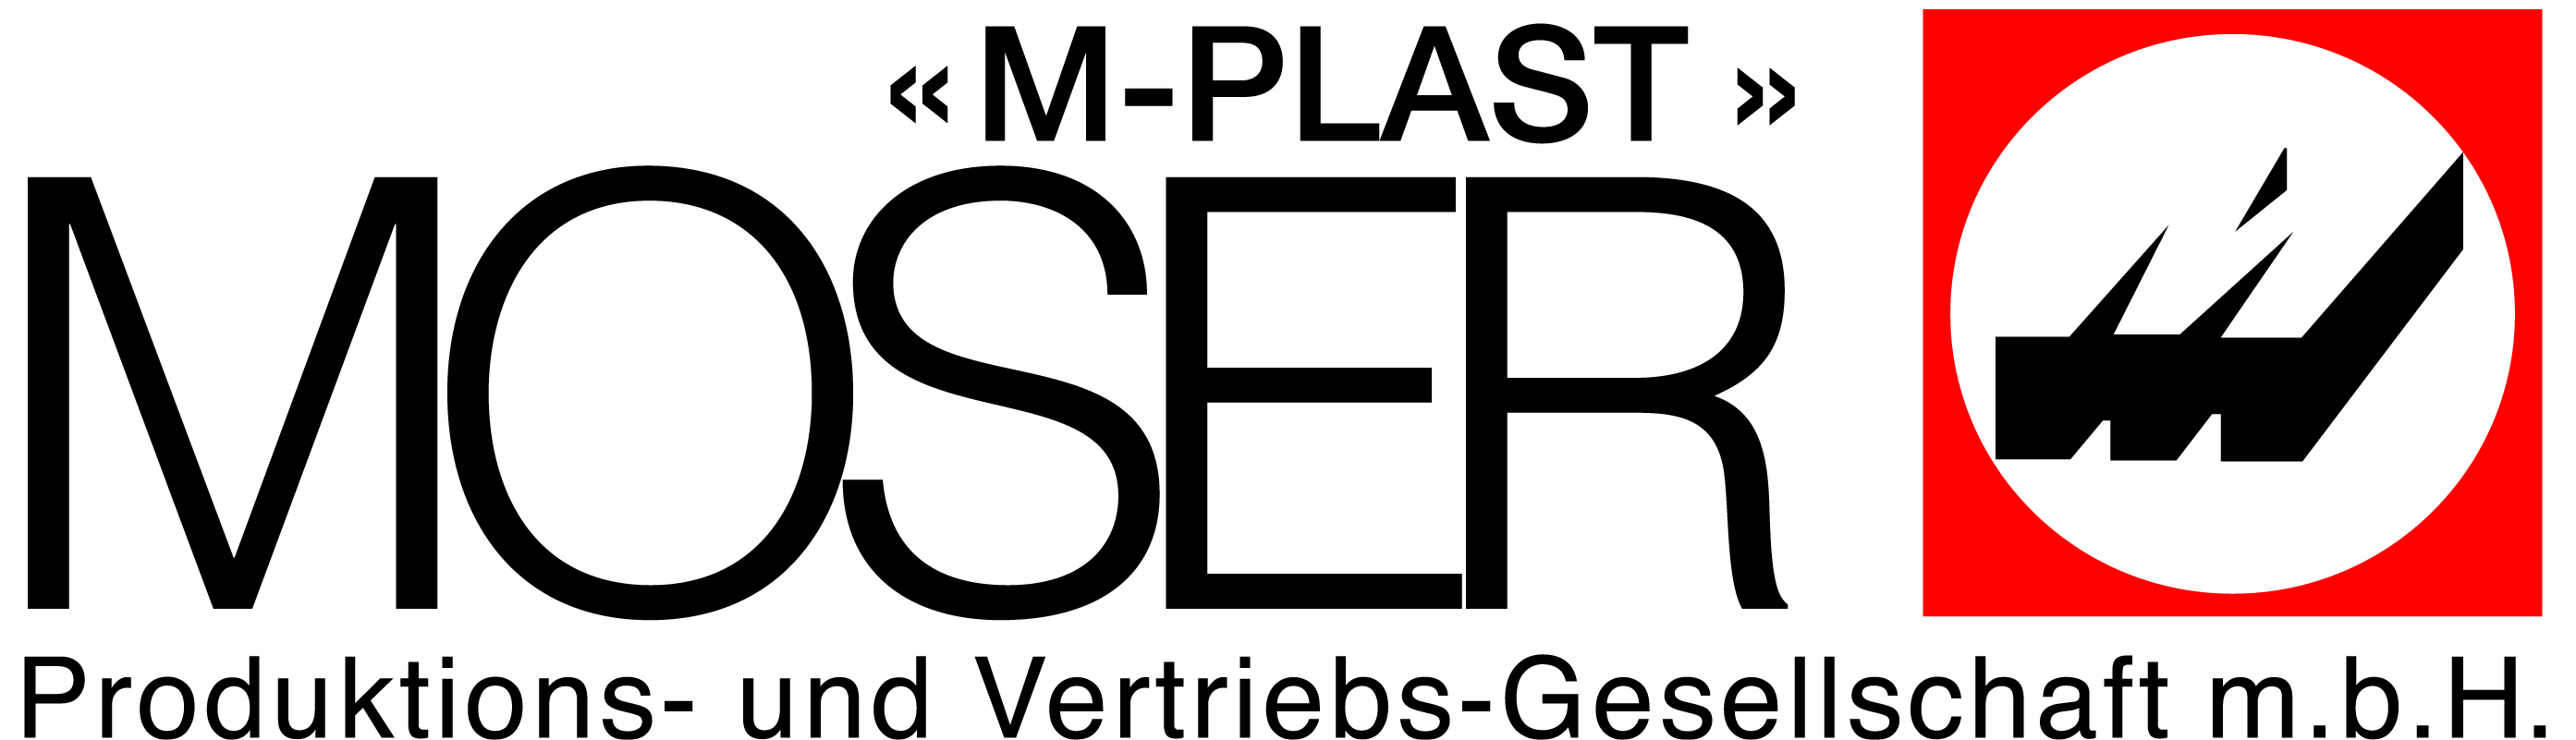 M-Plast Moser Dateienmanager